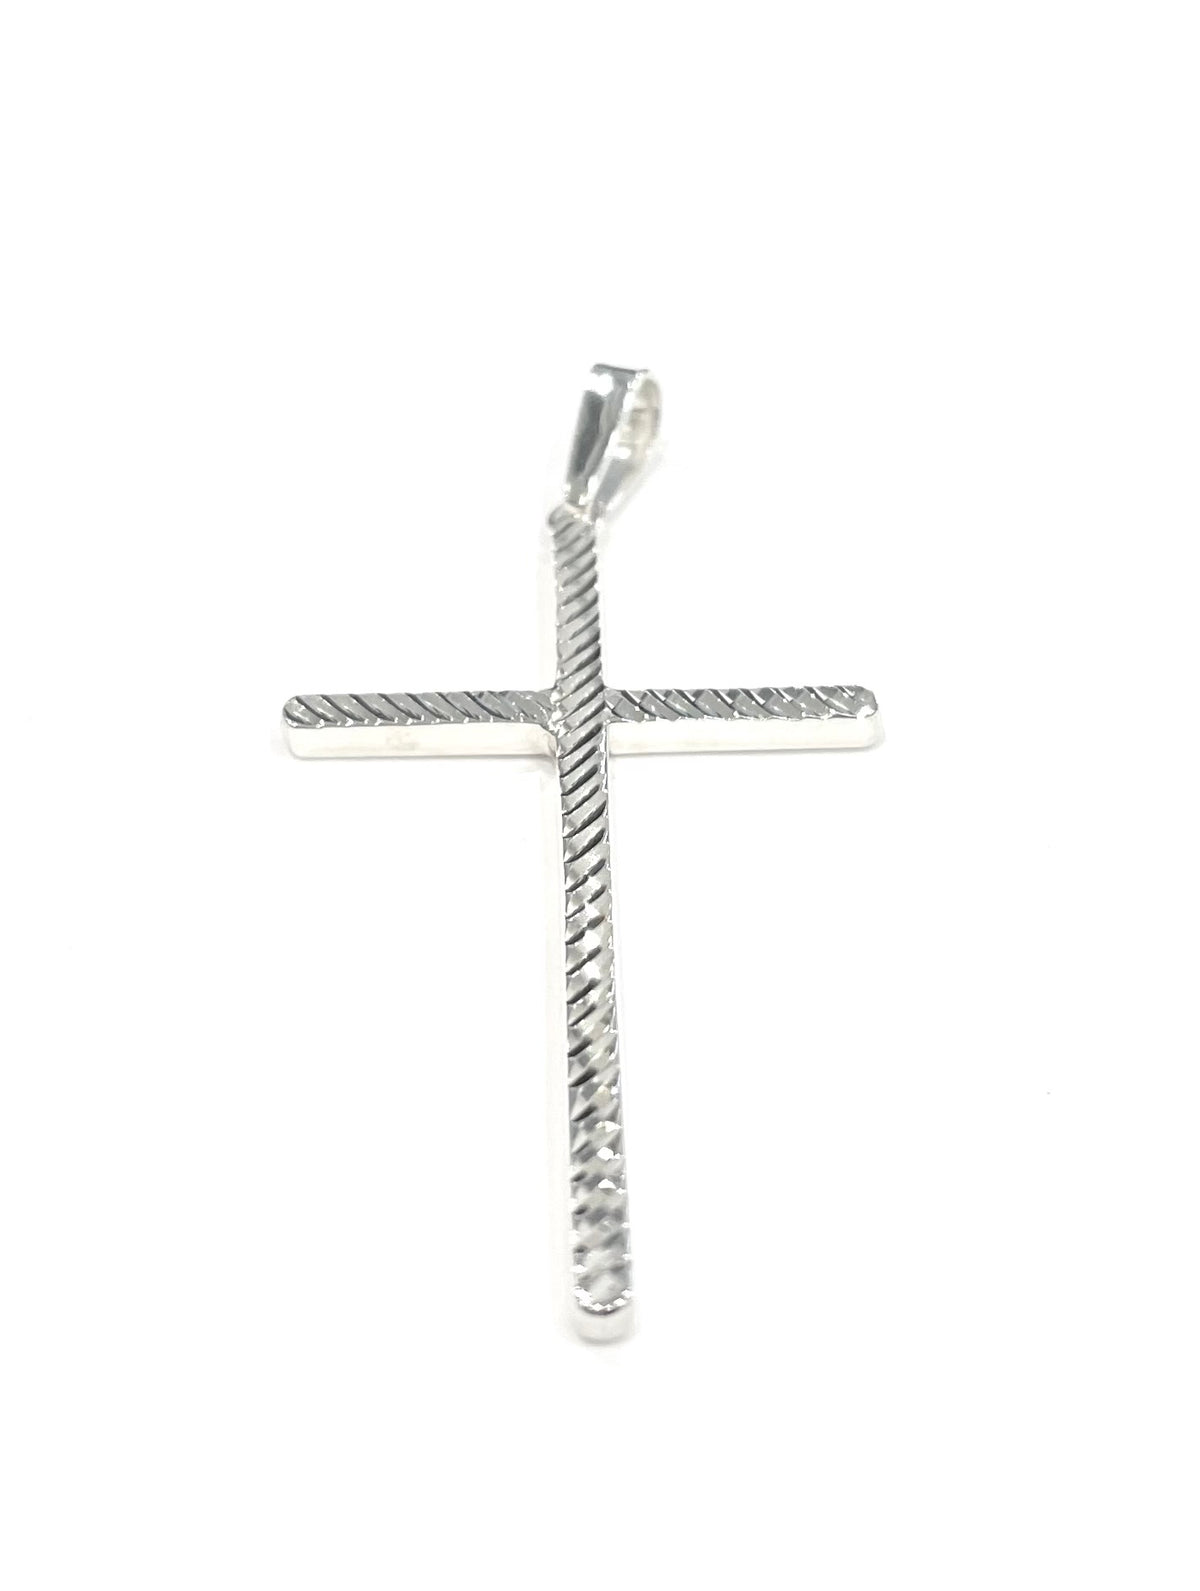 925 Sterling Silver High Polish Diamond Cut Cross Pendant - 49mm x 24mm